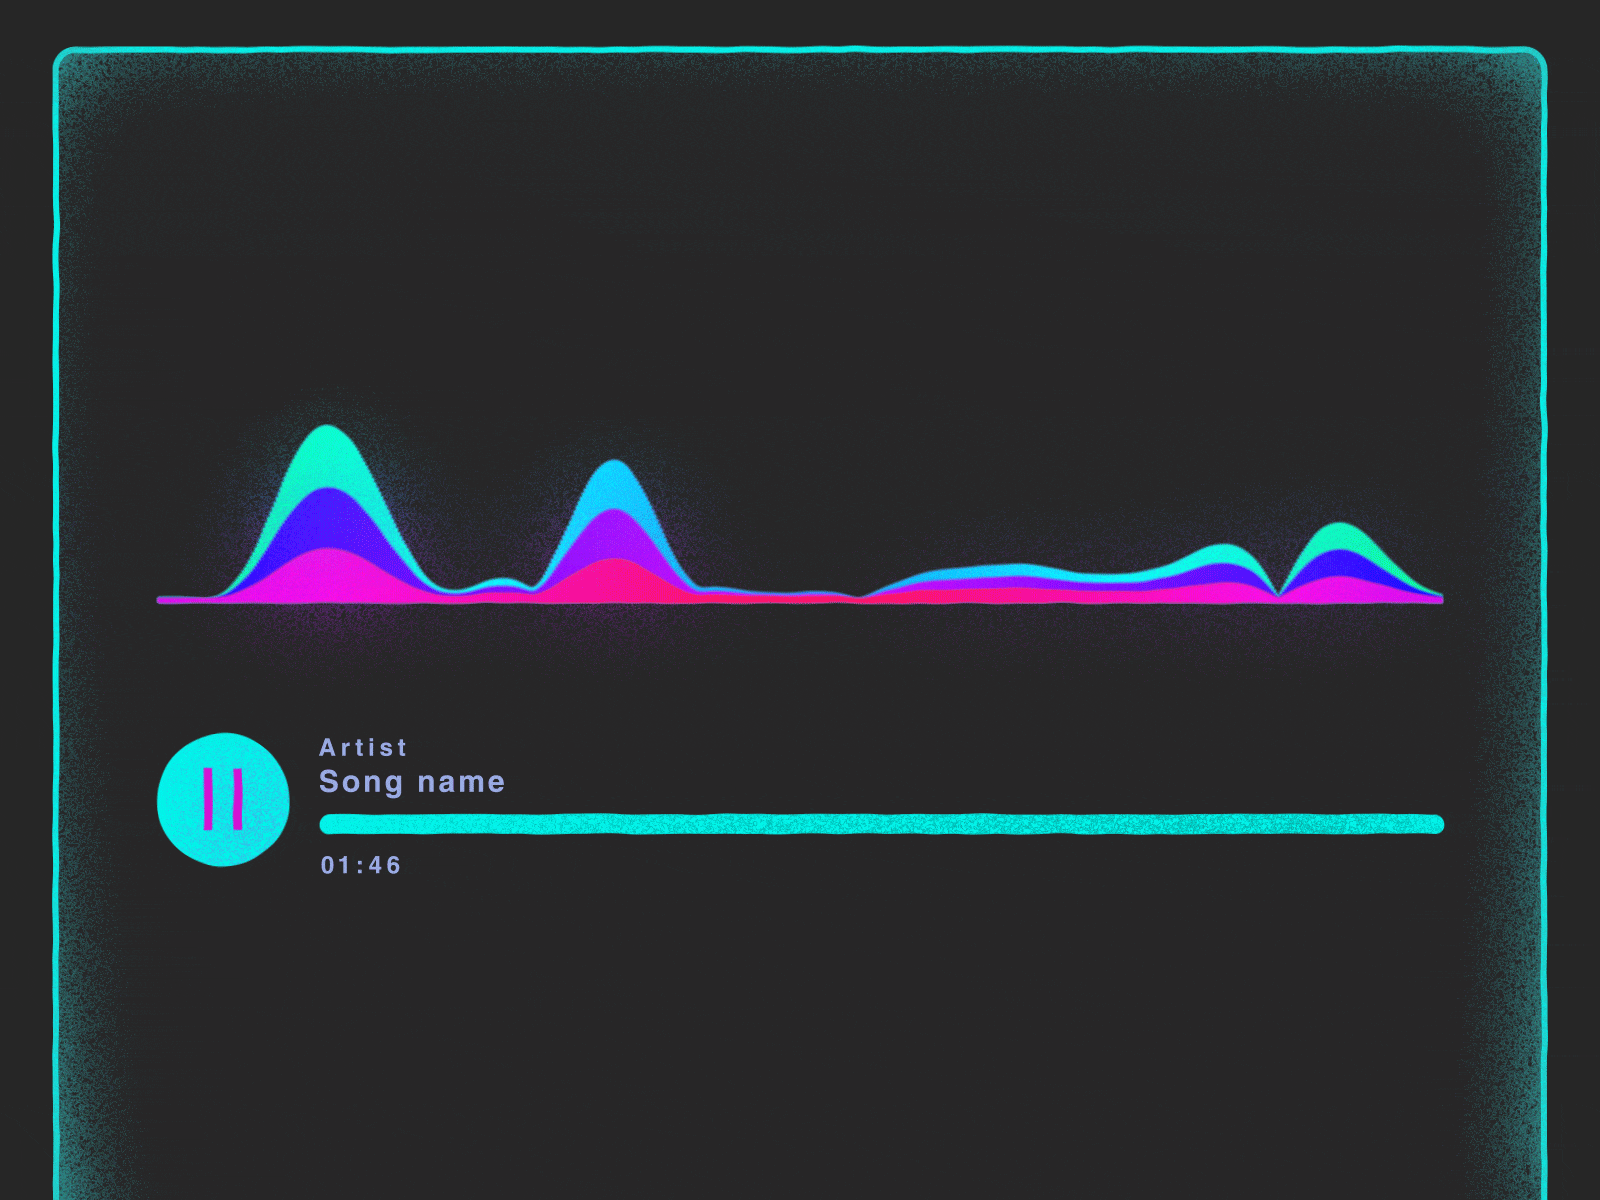 Audio Spectrum/Player Animation